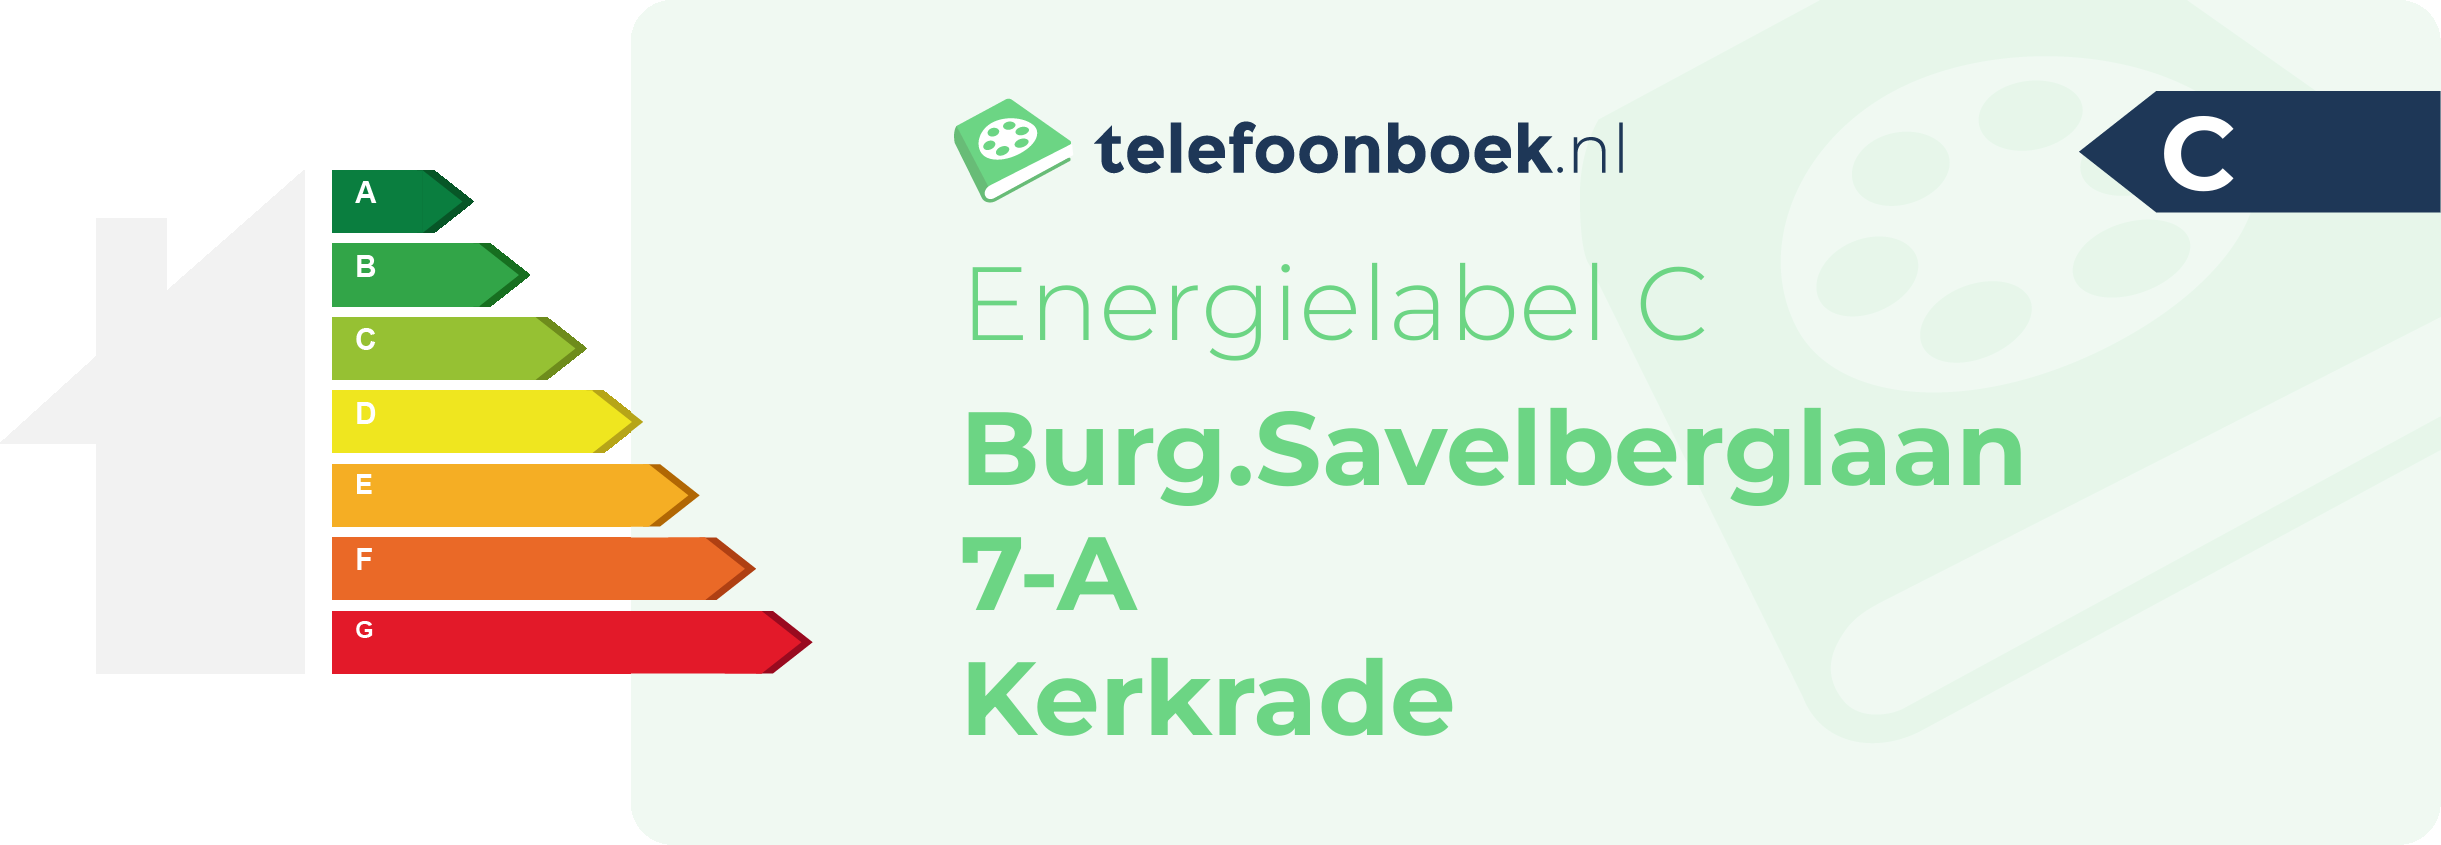 Energielabel Burg.Savelberglaan 7-A Kerkrade